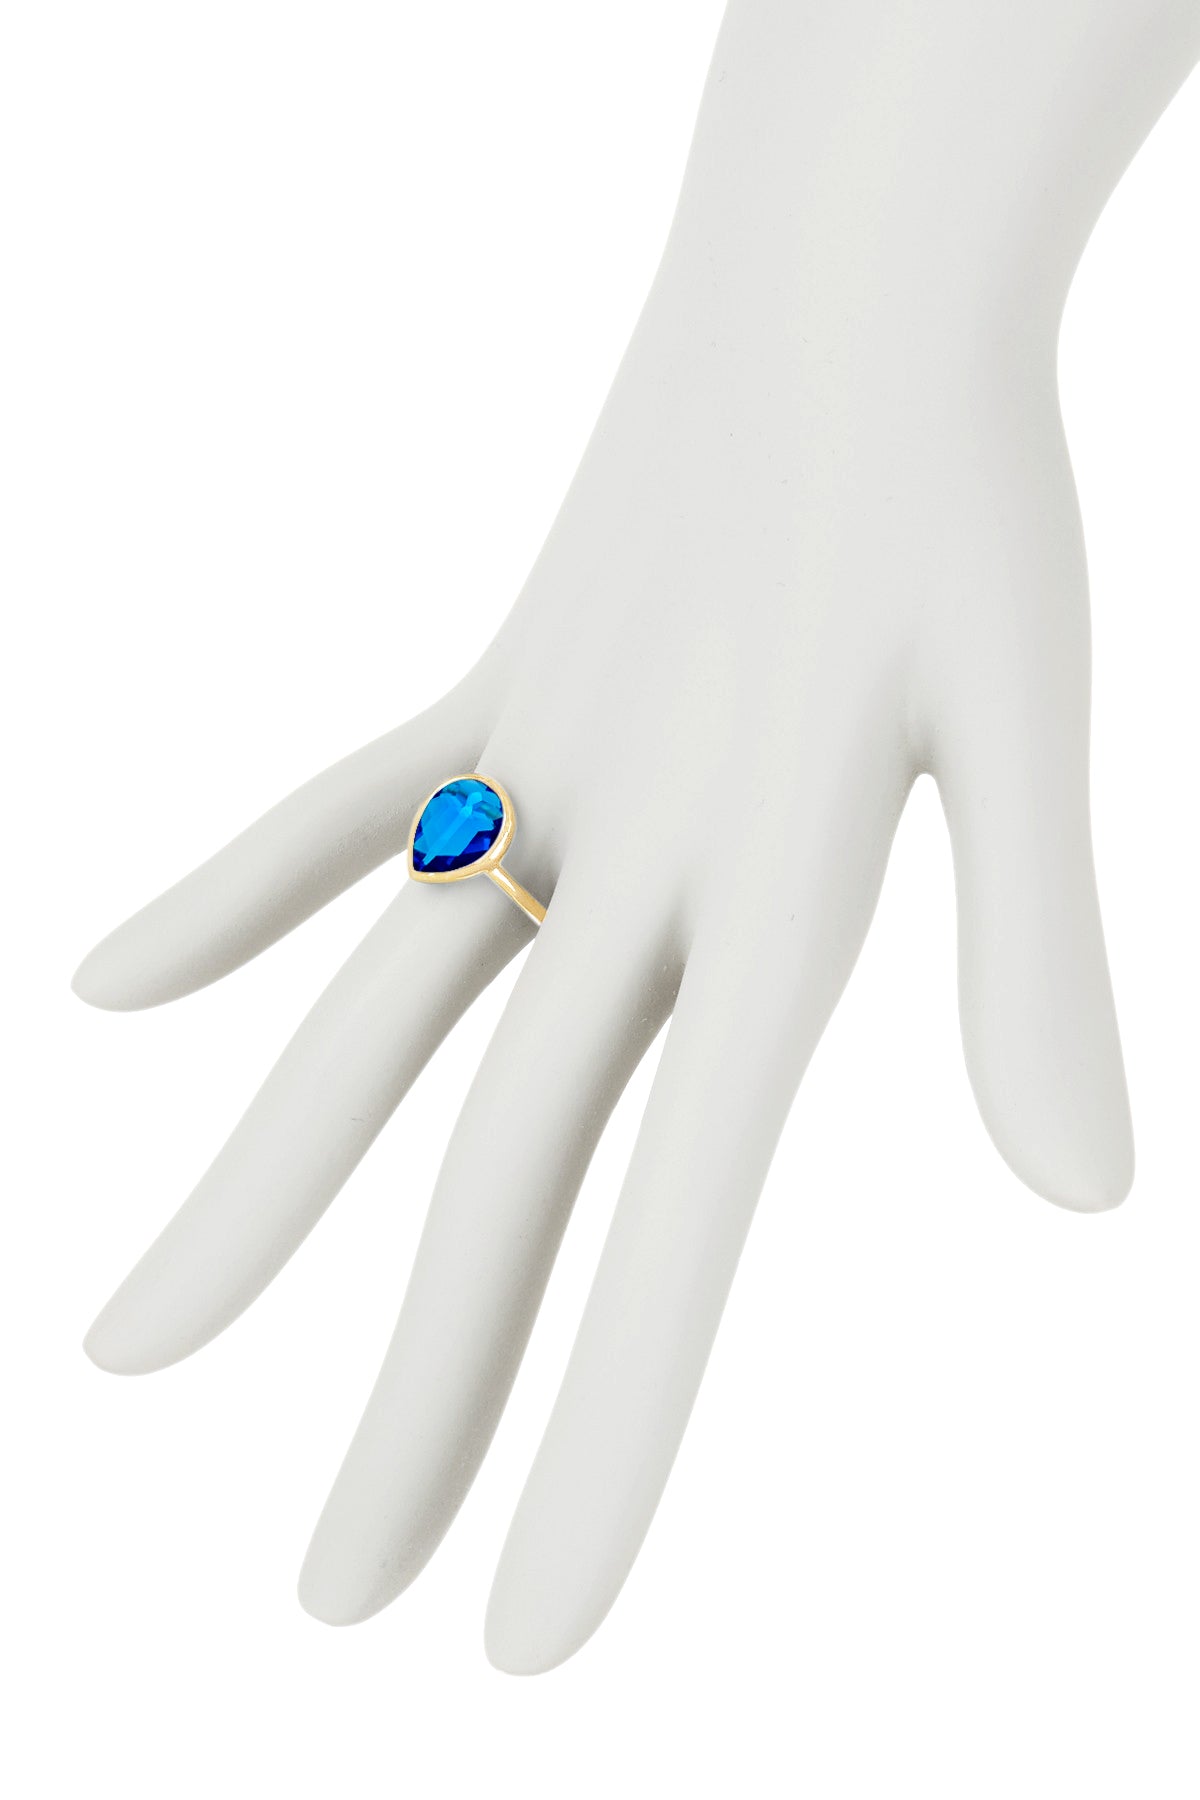 Swiss Blue Crystal Pear Ring In 14k - GF